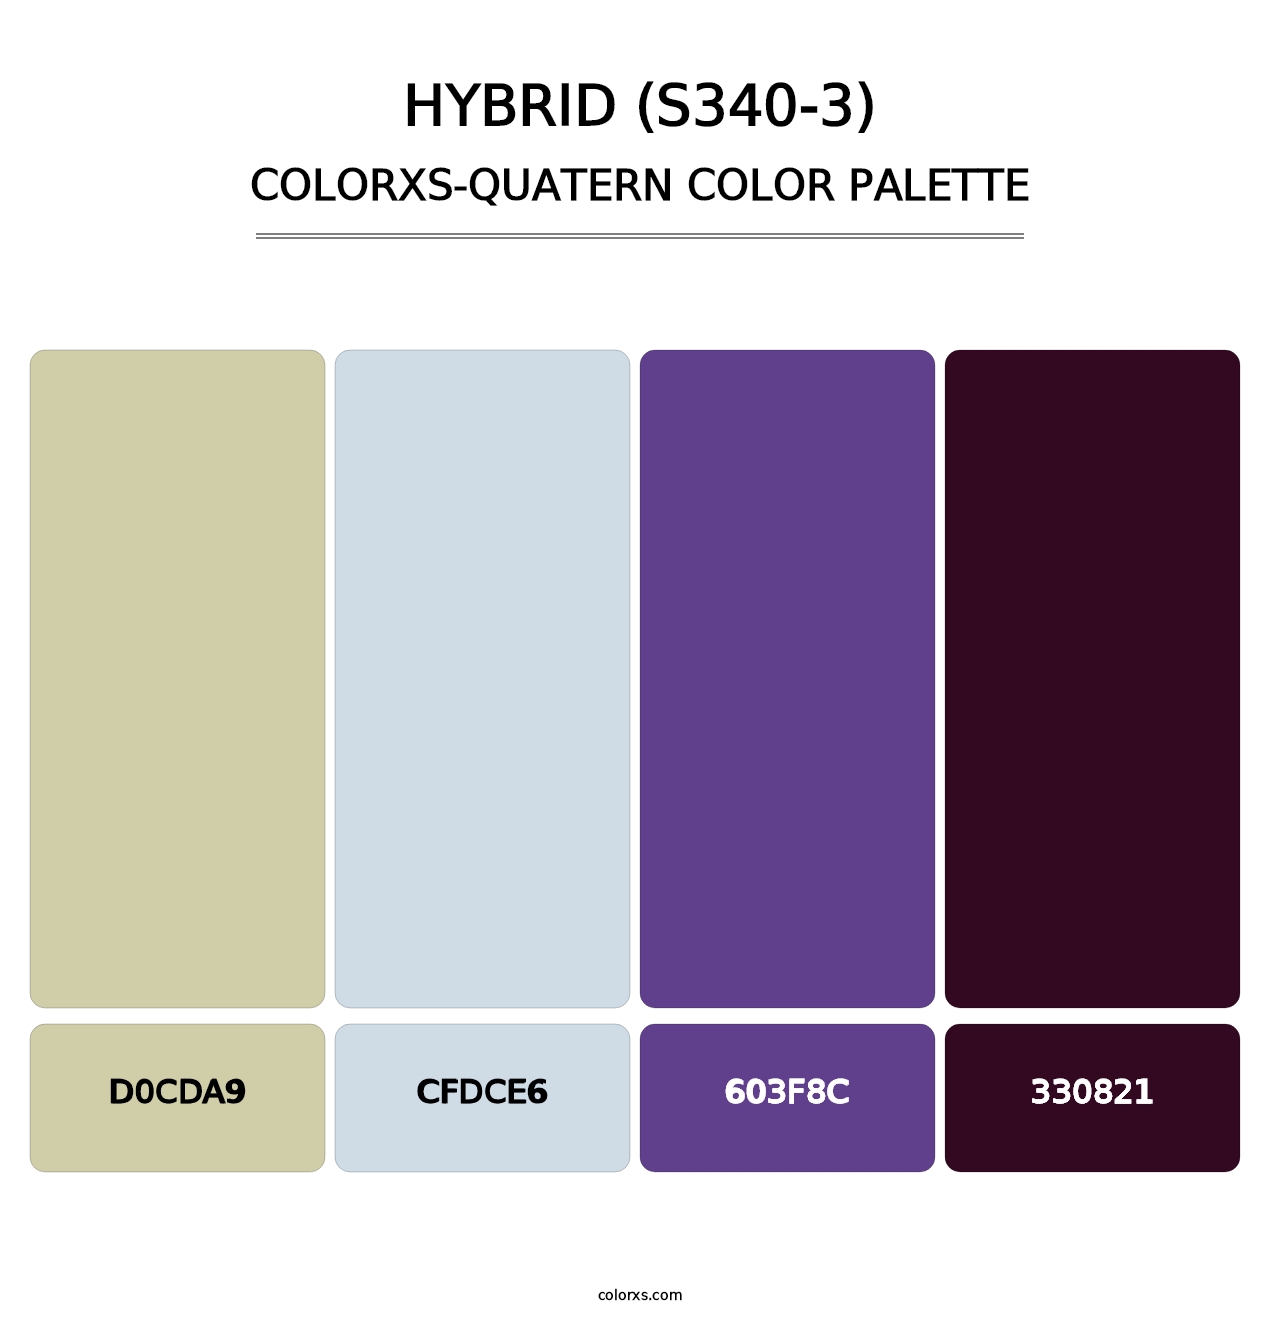 Hybrid (S340-3) - Colorxs Quatern Palette